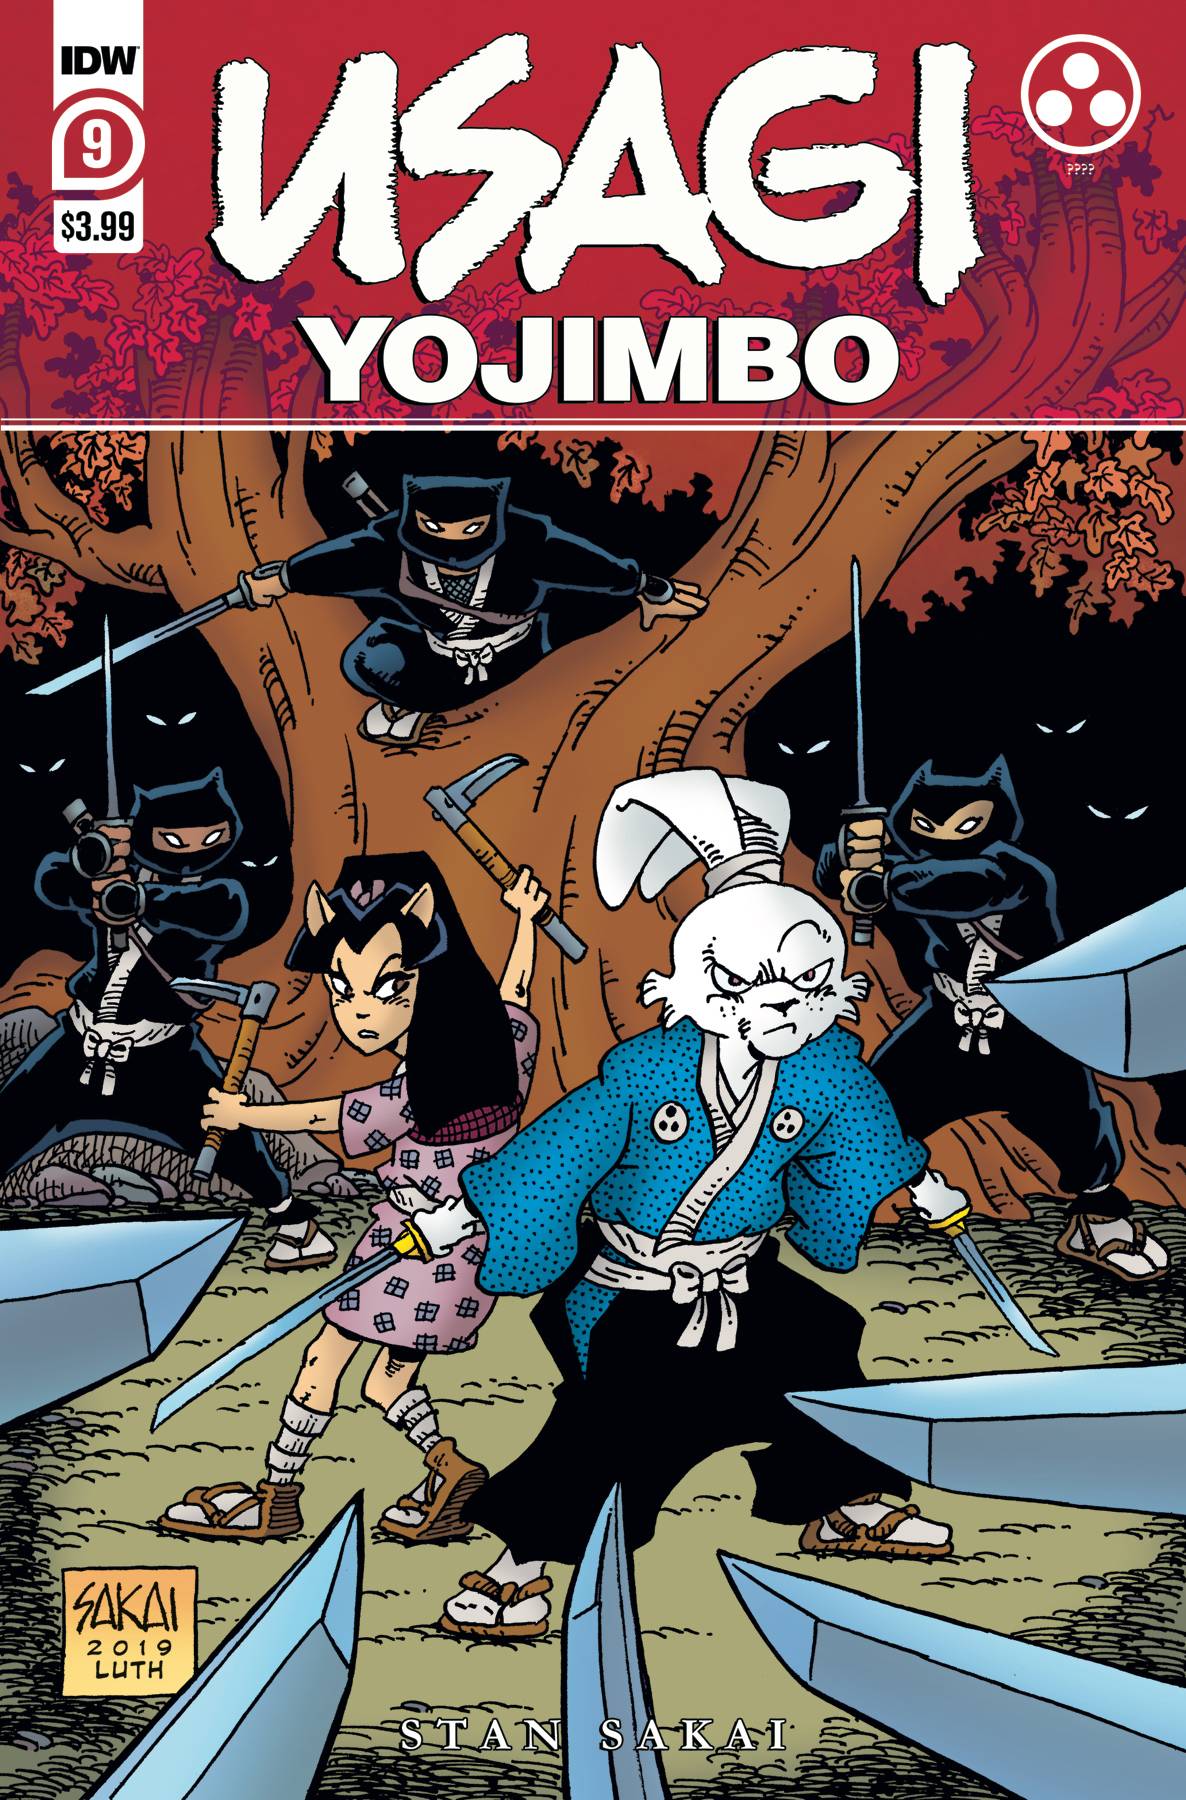 Usagi Yojimbo #9 Cover A Sakai (2019)